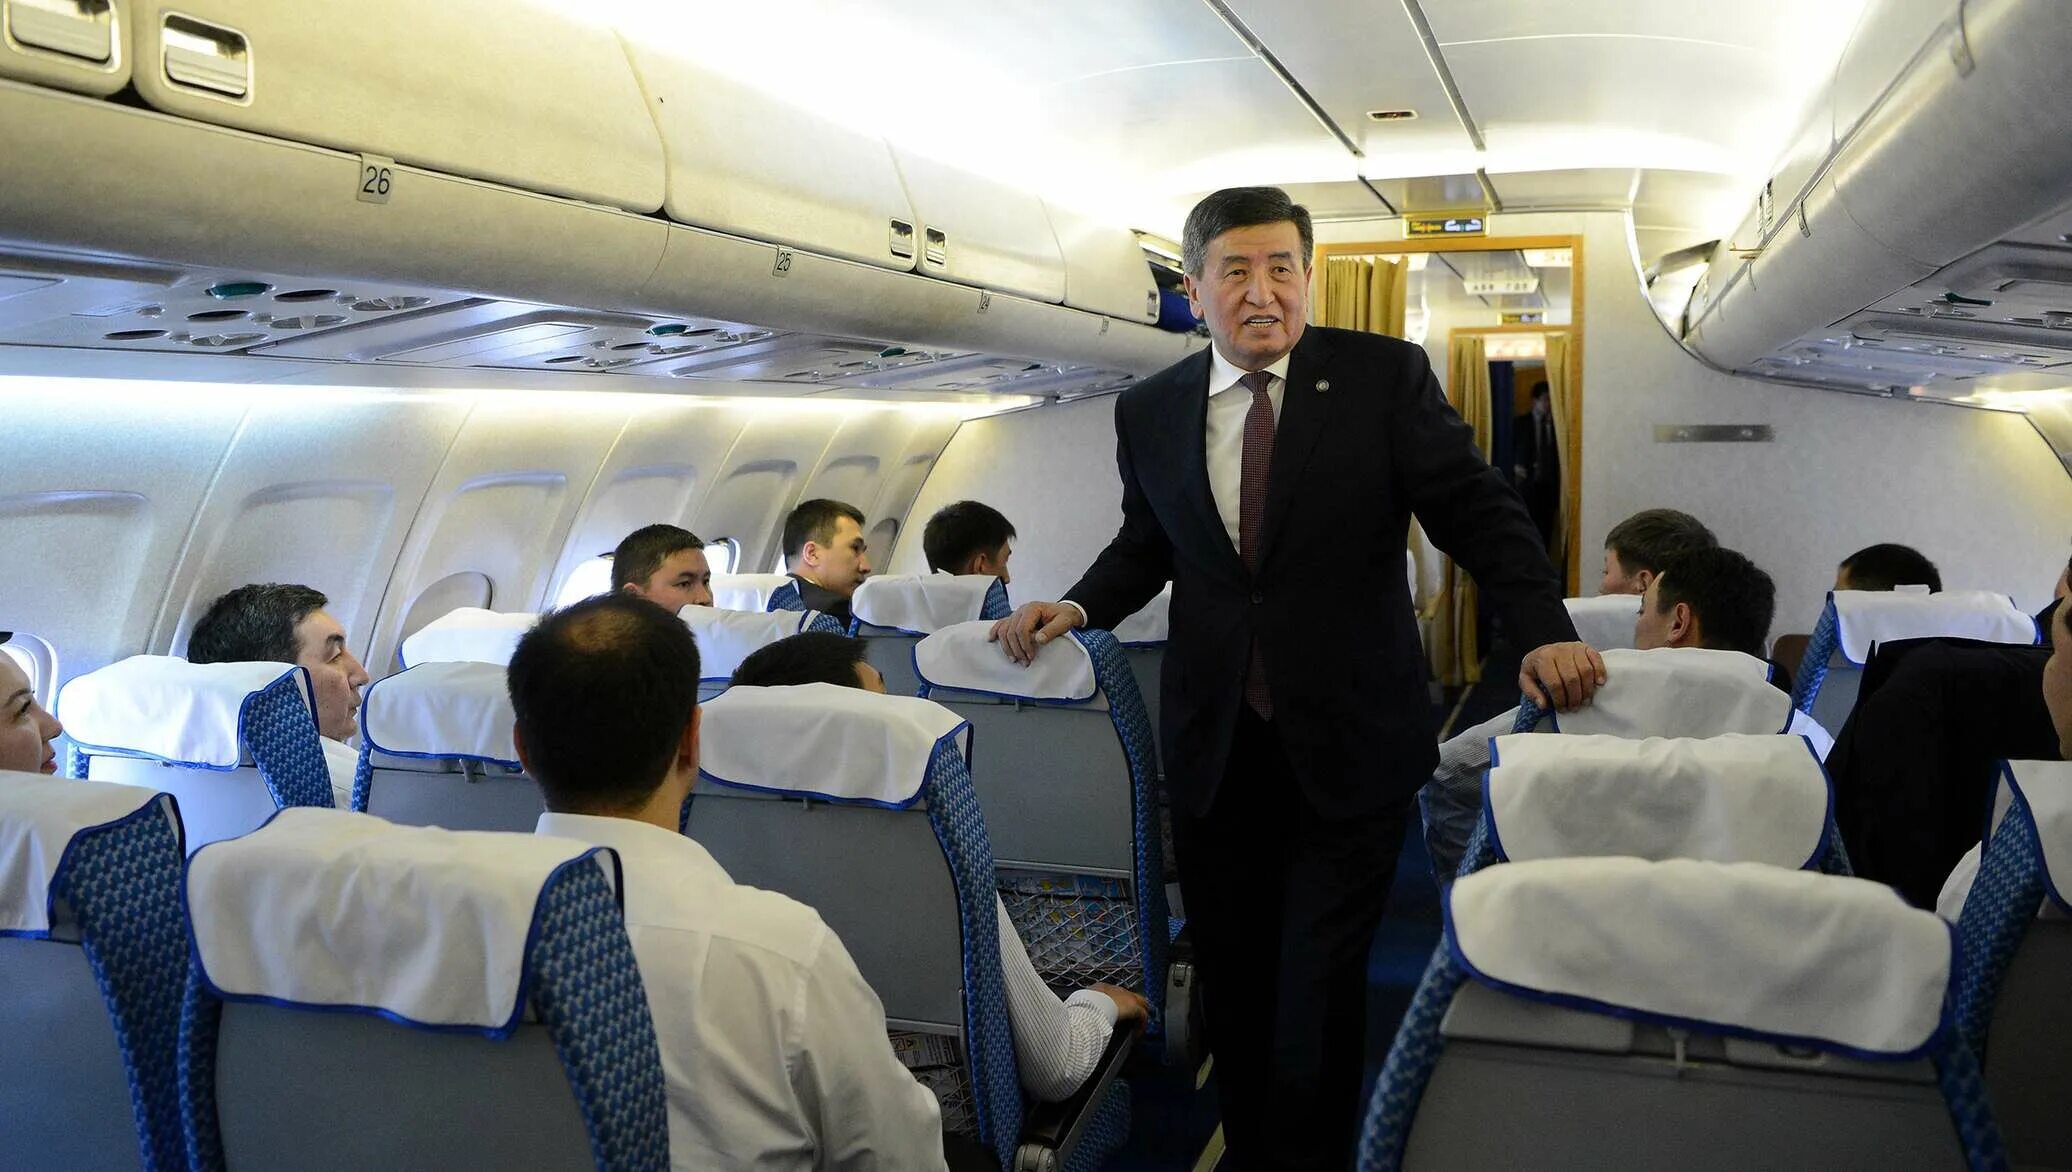 Самолет глав стран. Самолёт президента Киргизии. Самолет приздиинт Кыргызстан. Киргиз в самолёте.